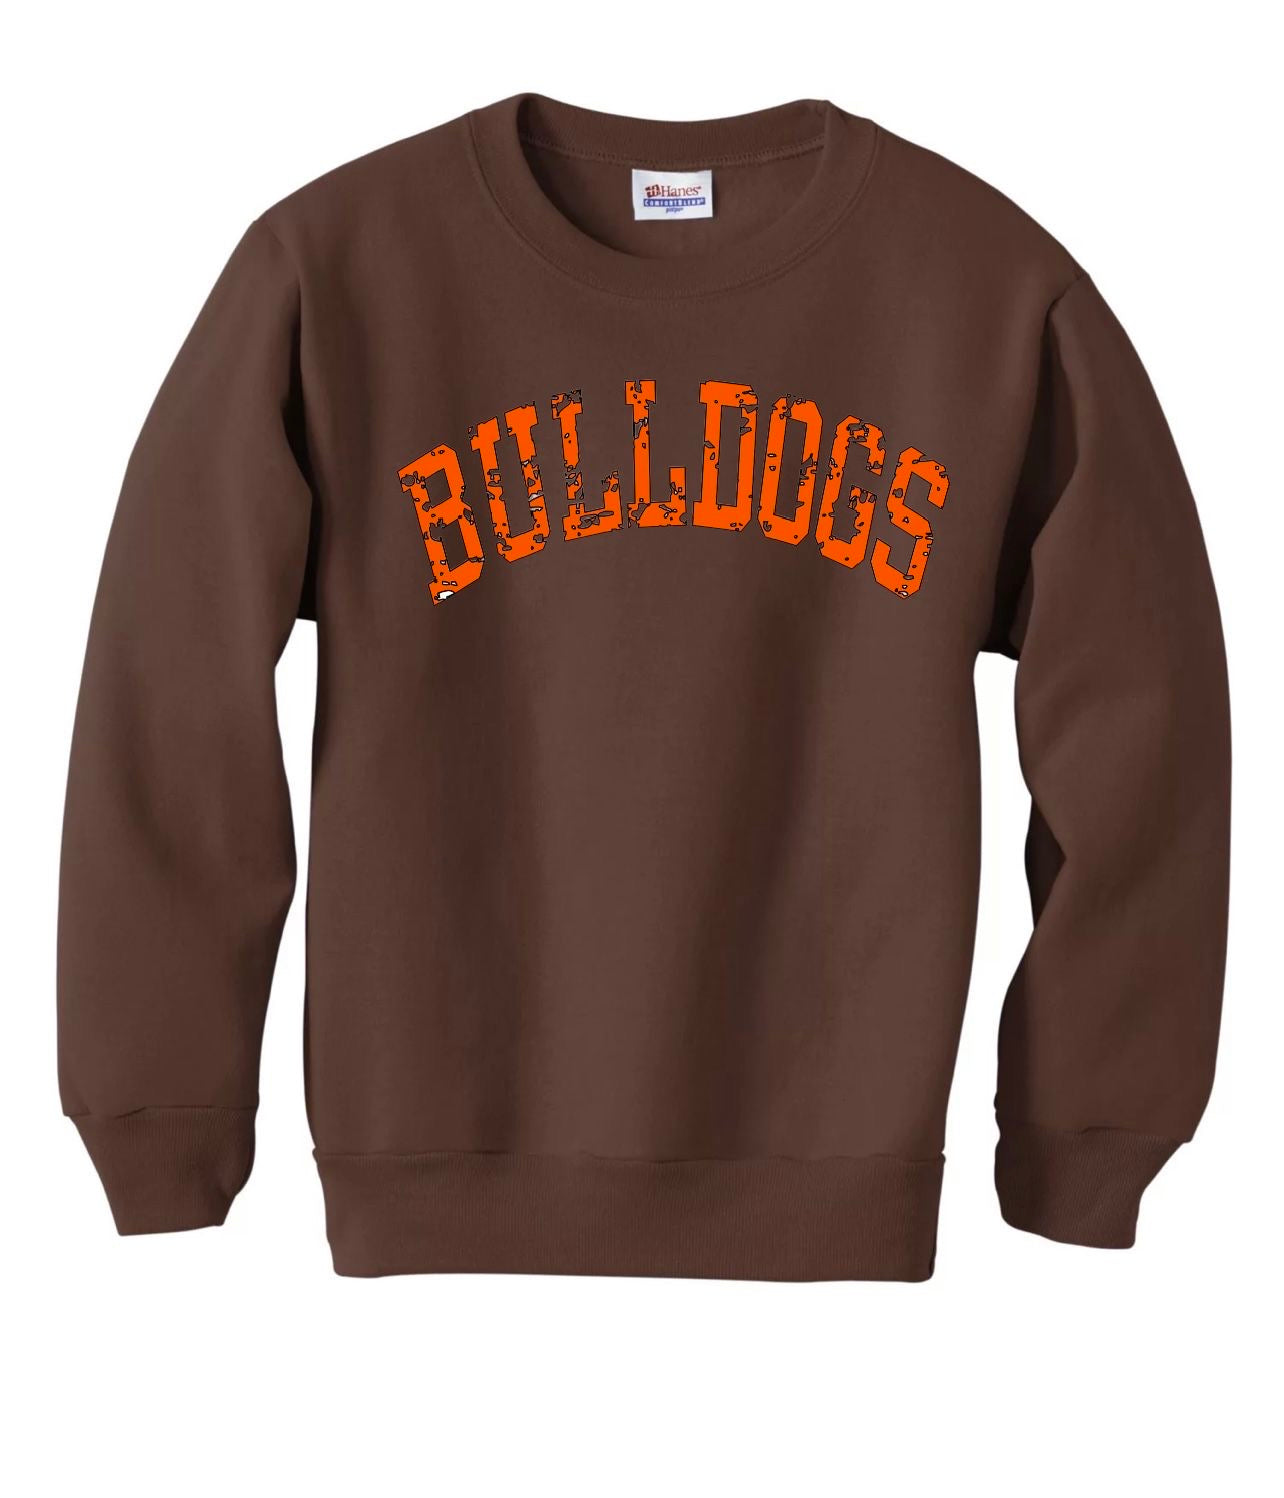 Distressed Block Bulldogs Crewneck Sweatshirt - HSS